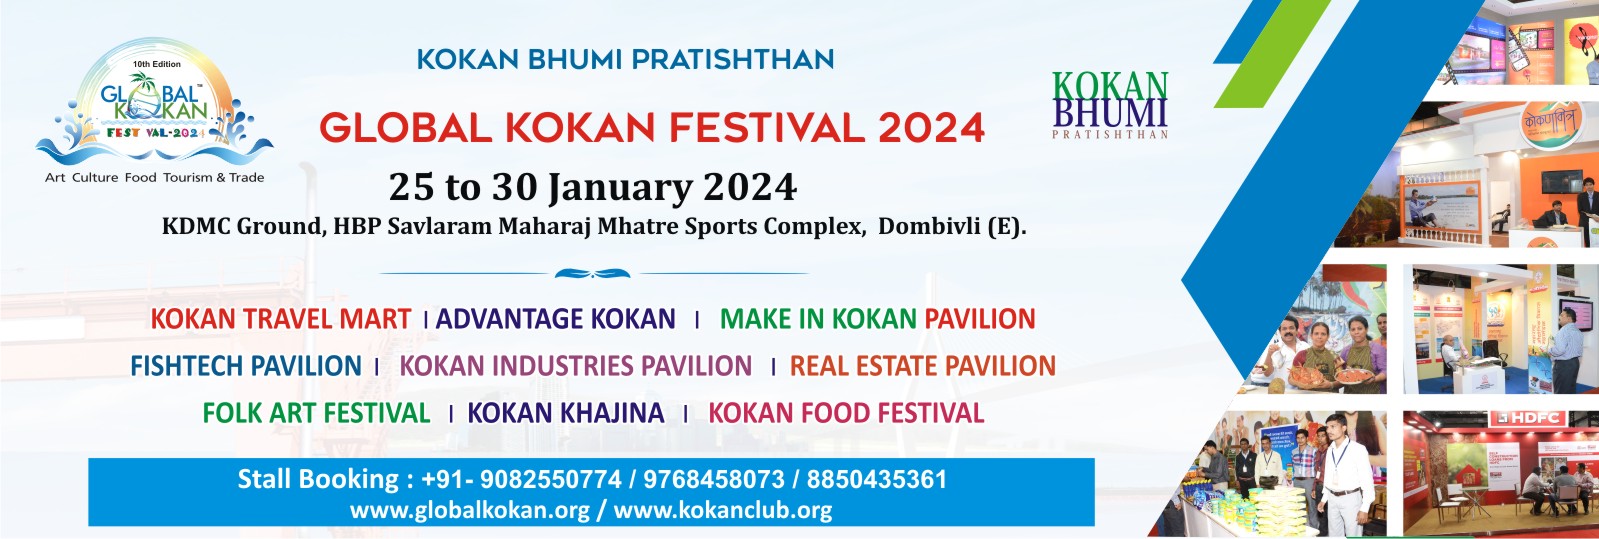 Global Kokan Festival 2024